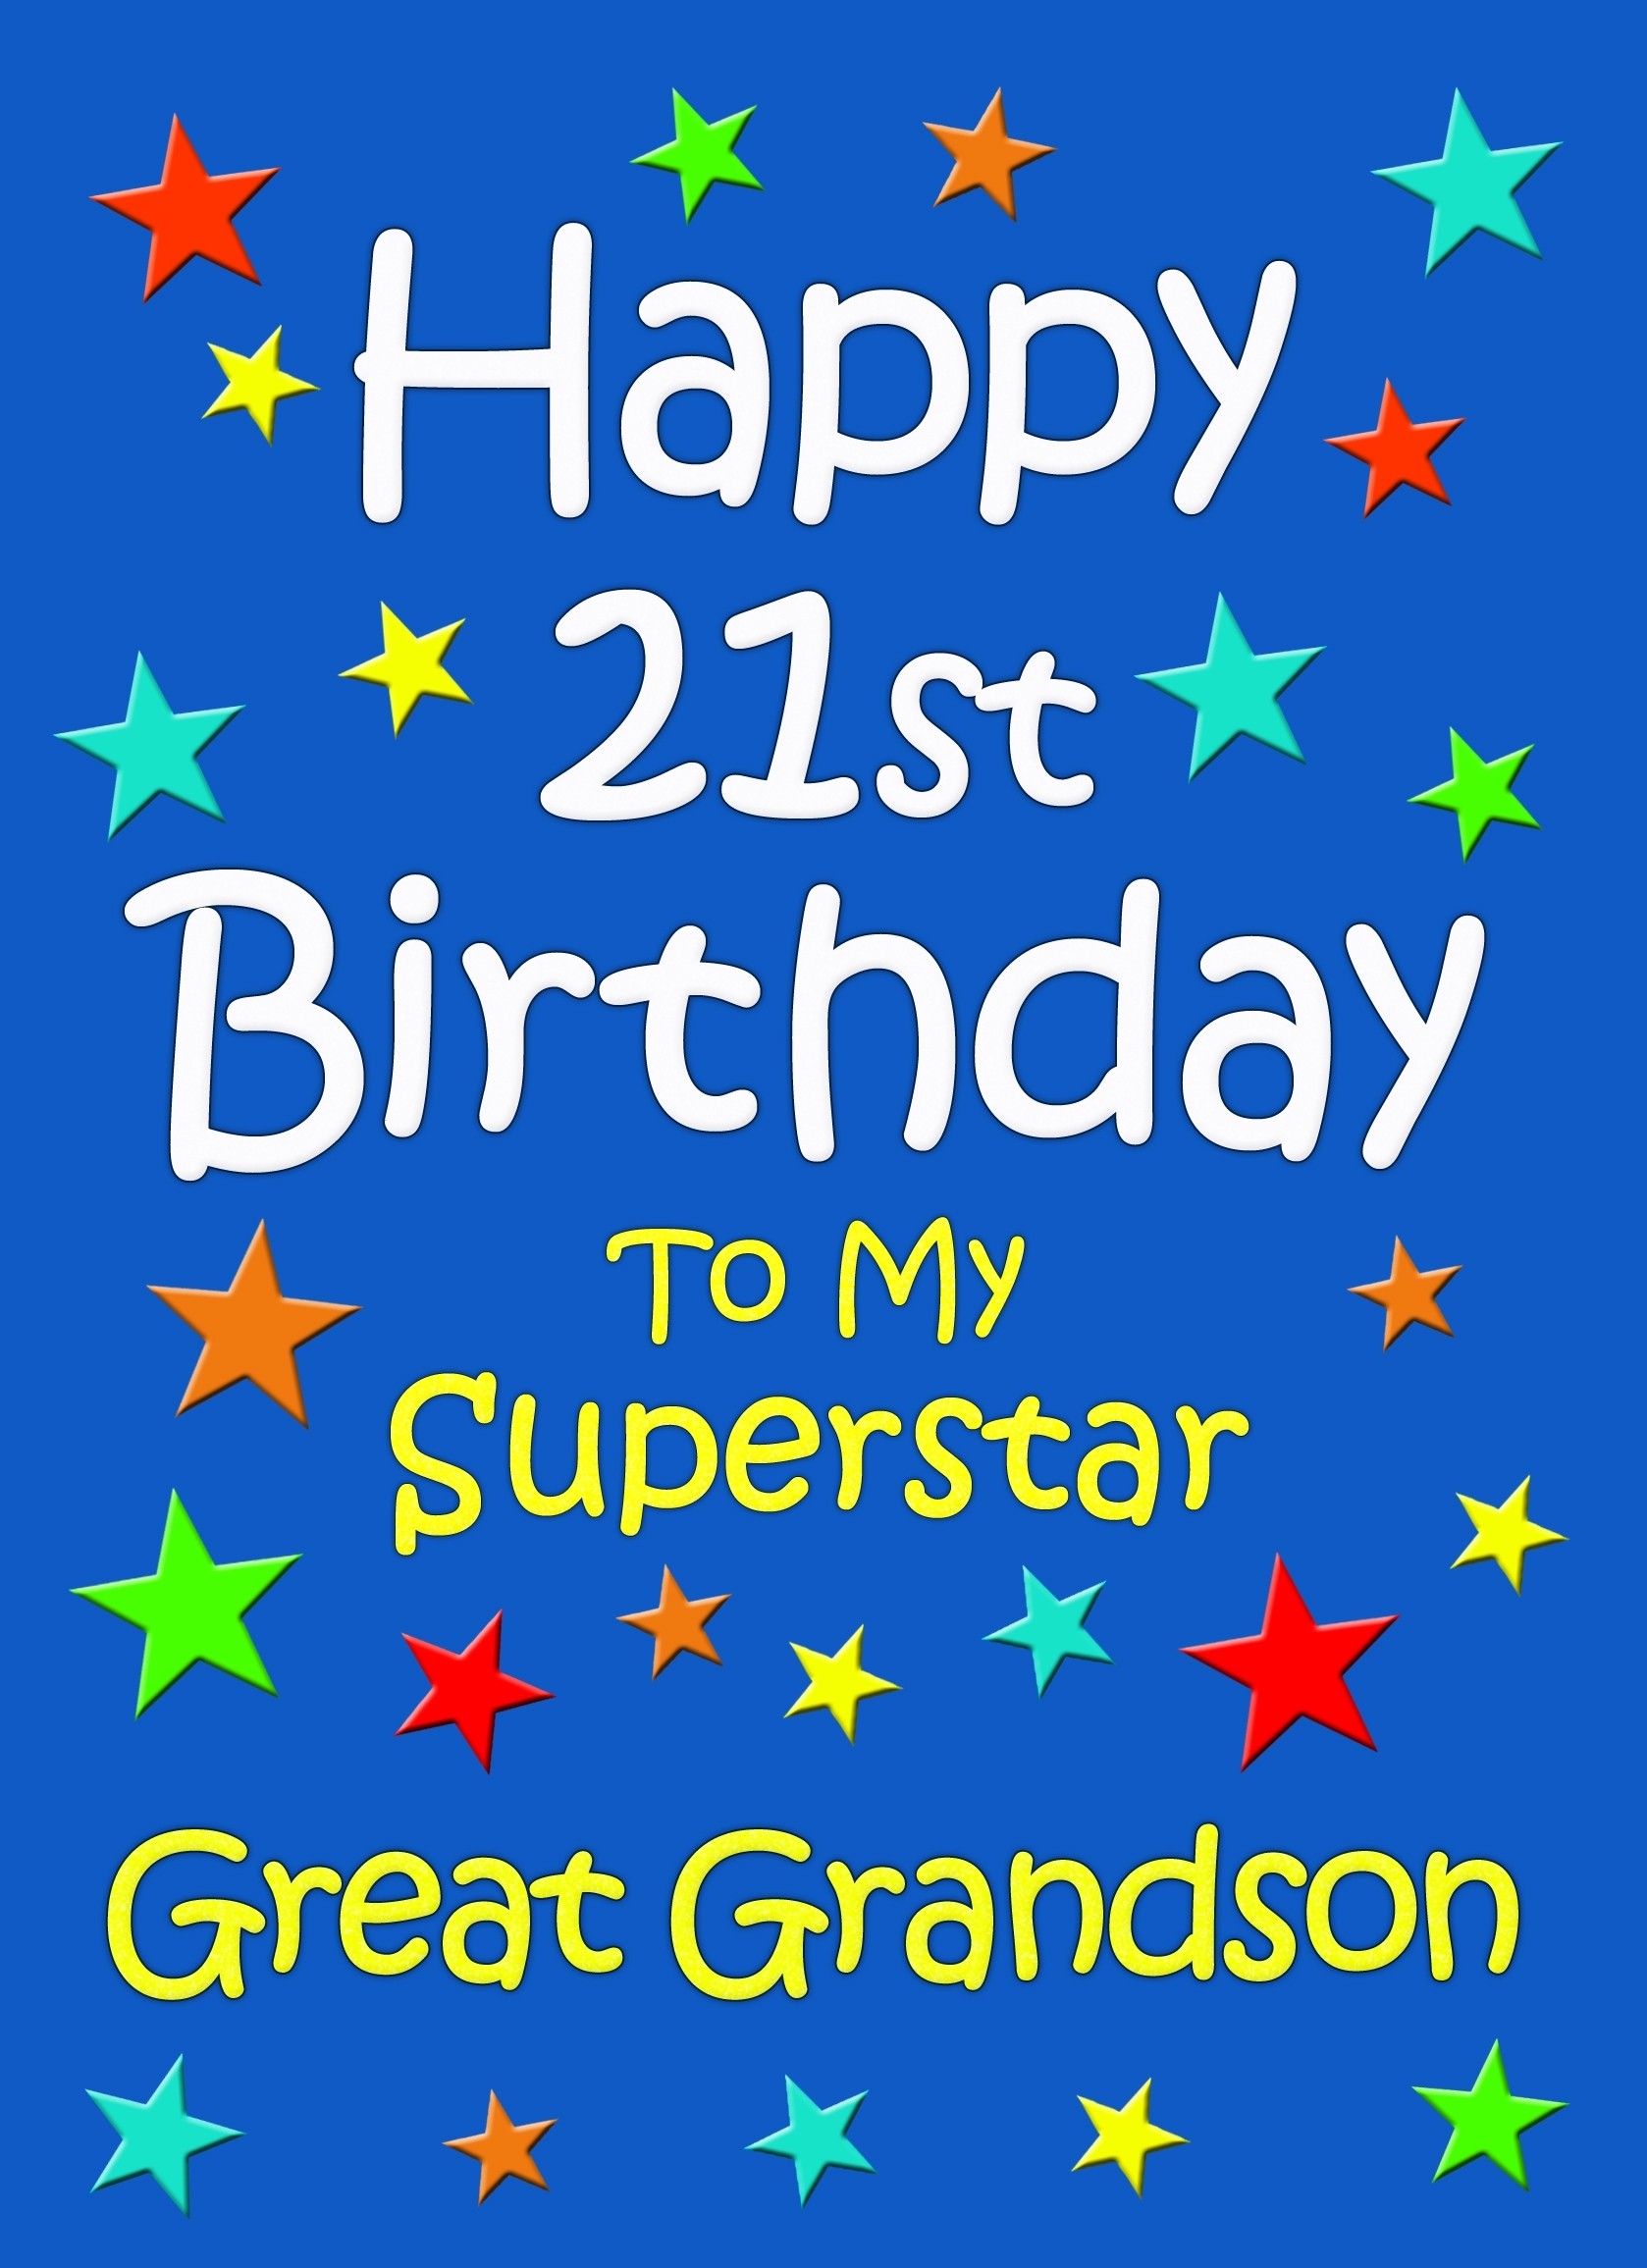 Great Grandson 21st Birthday Card (Blue)